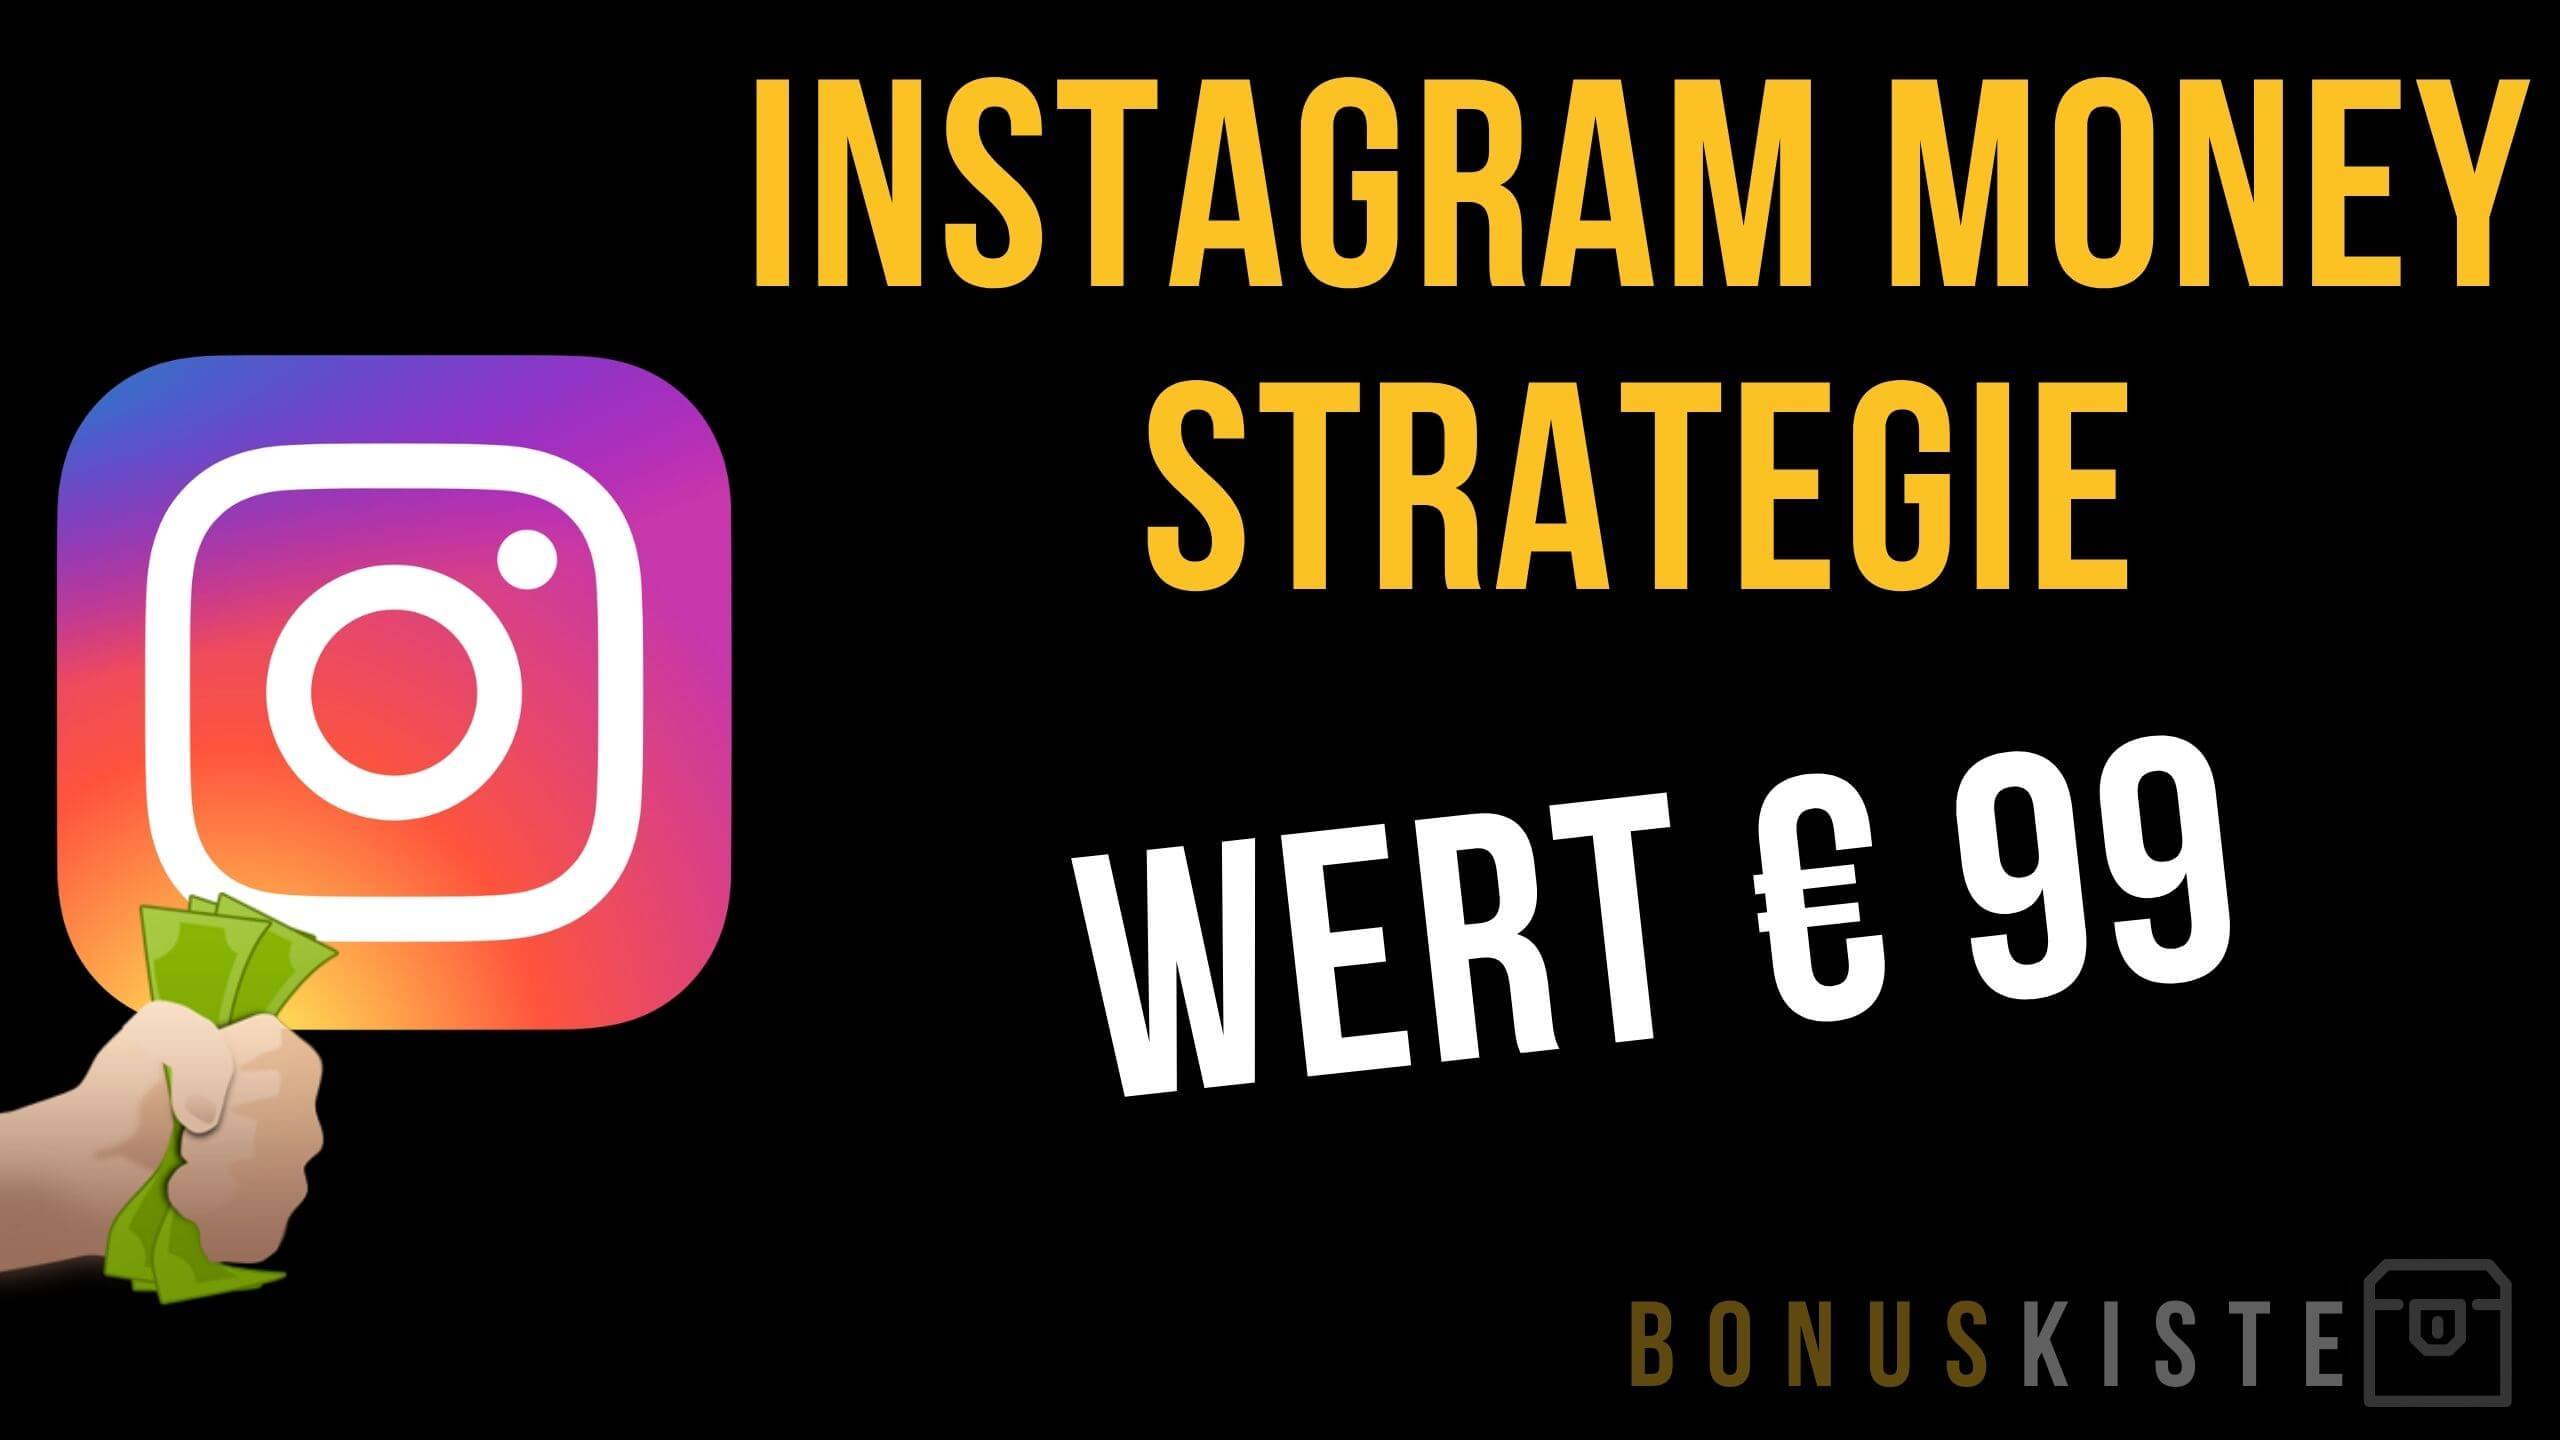 Instagram Money Strategie